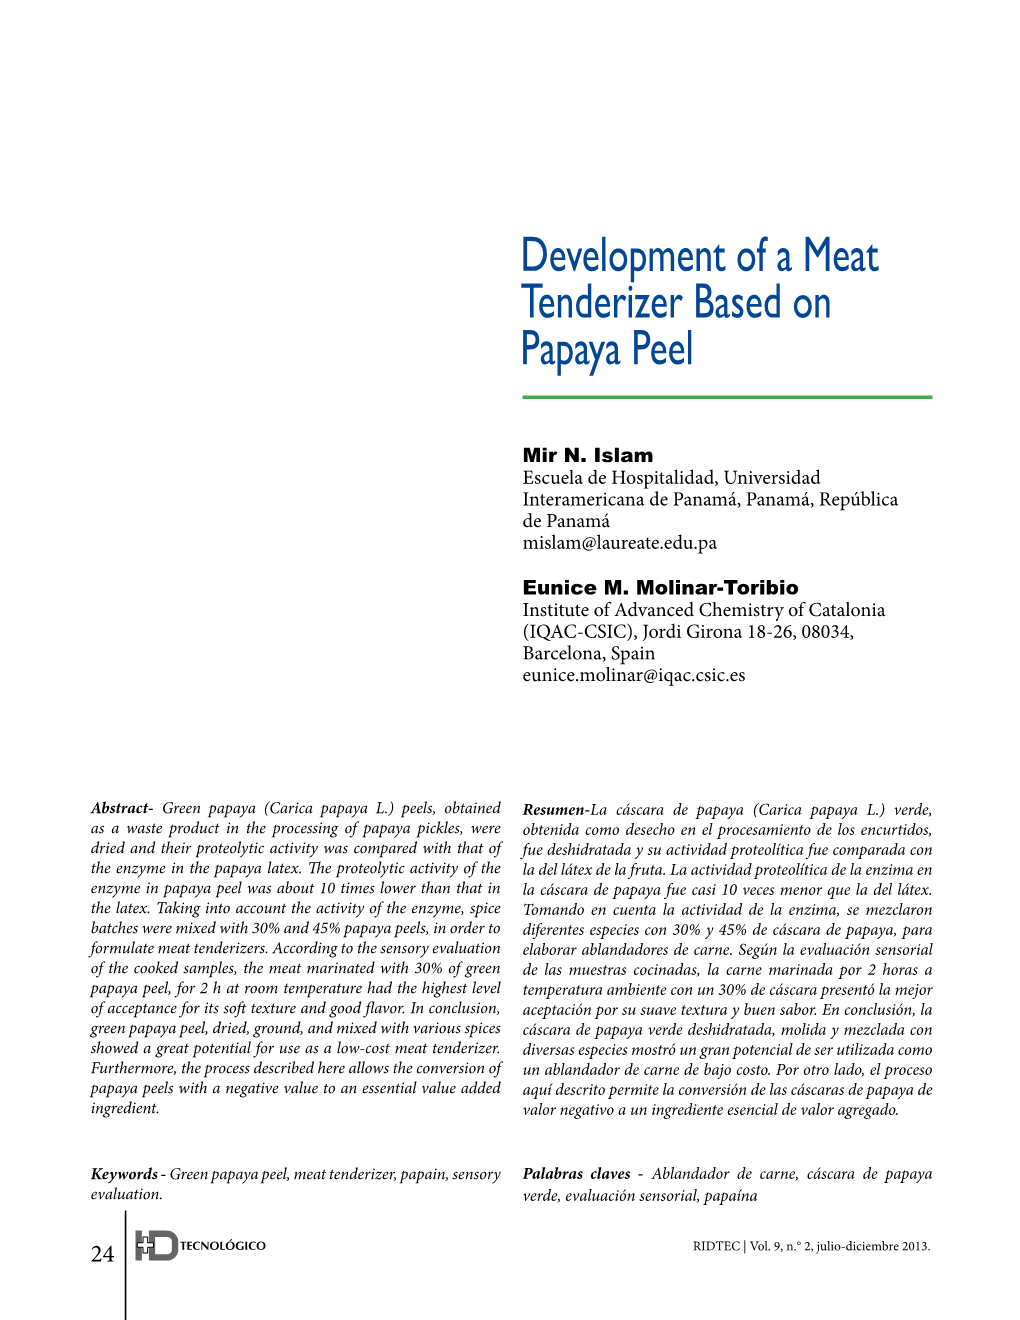 Development of a Meat Tenderizer Based on Papaya Peel